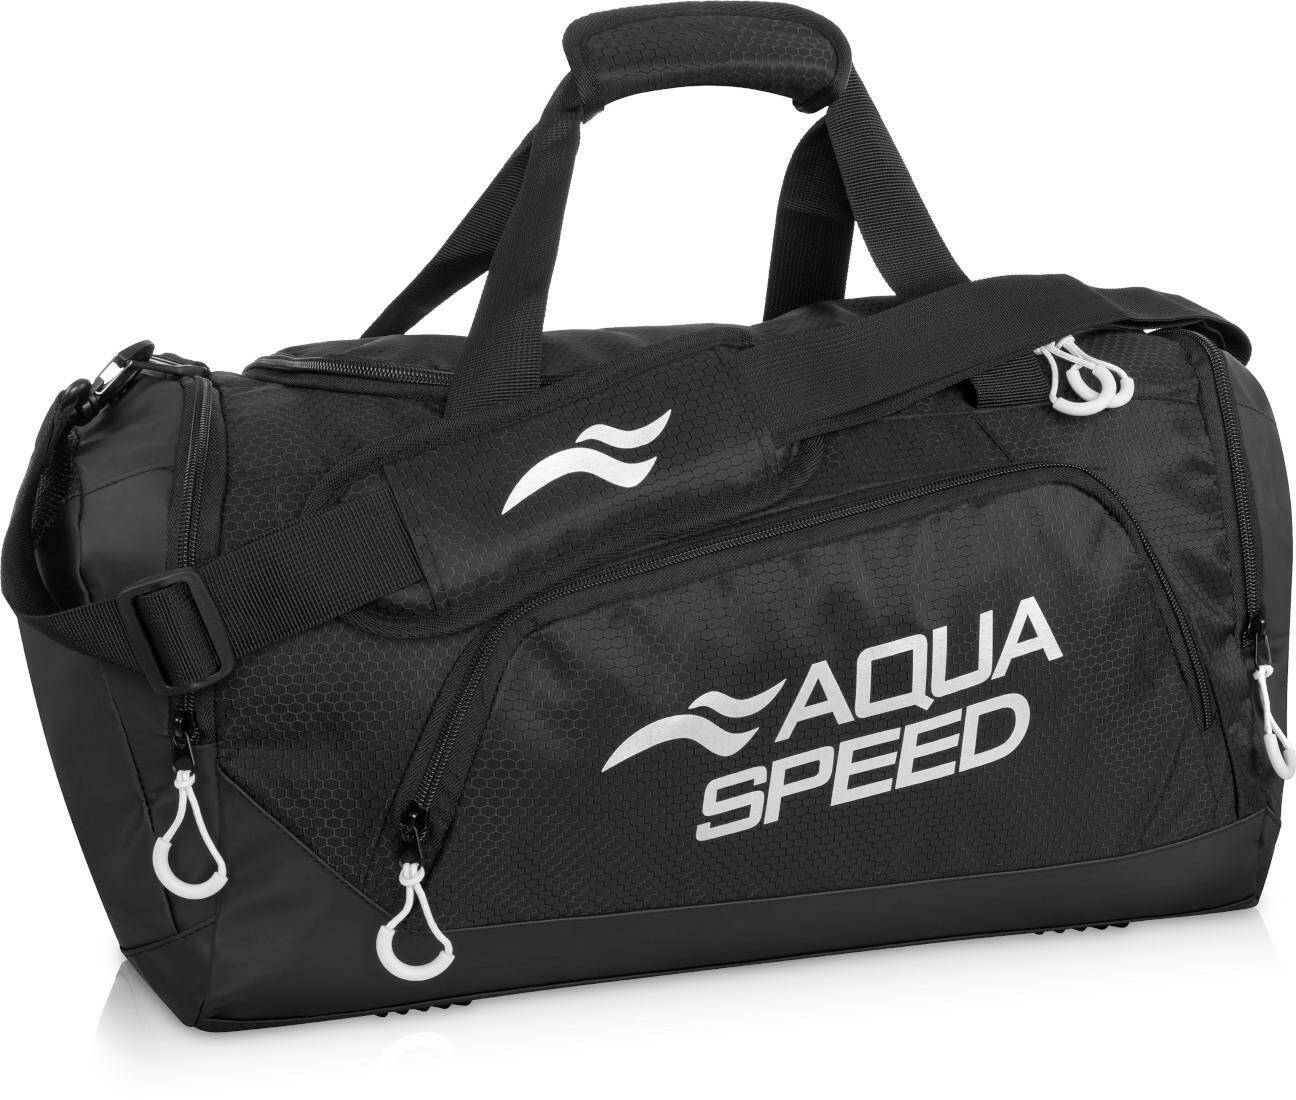 AQUA-SPEED duffle bag size M col. 07